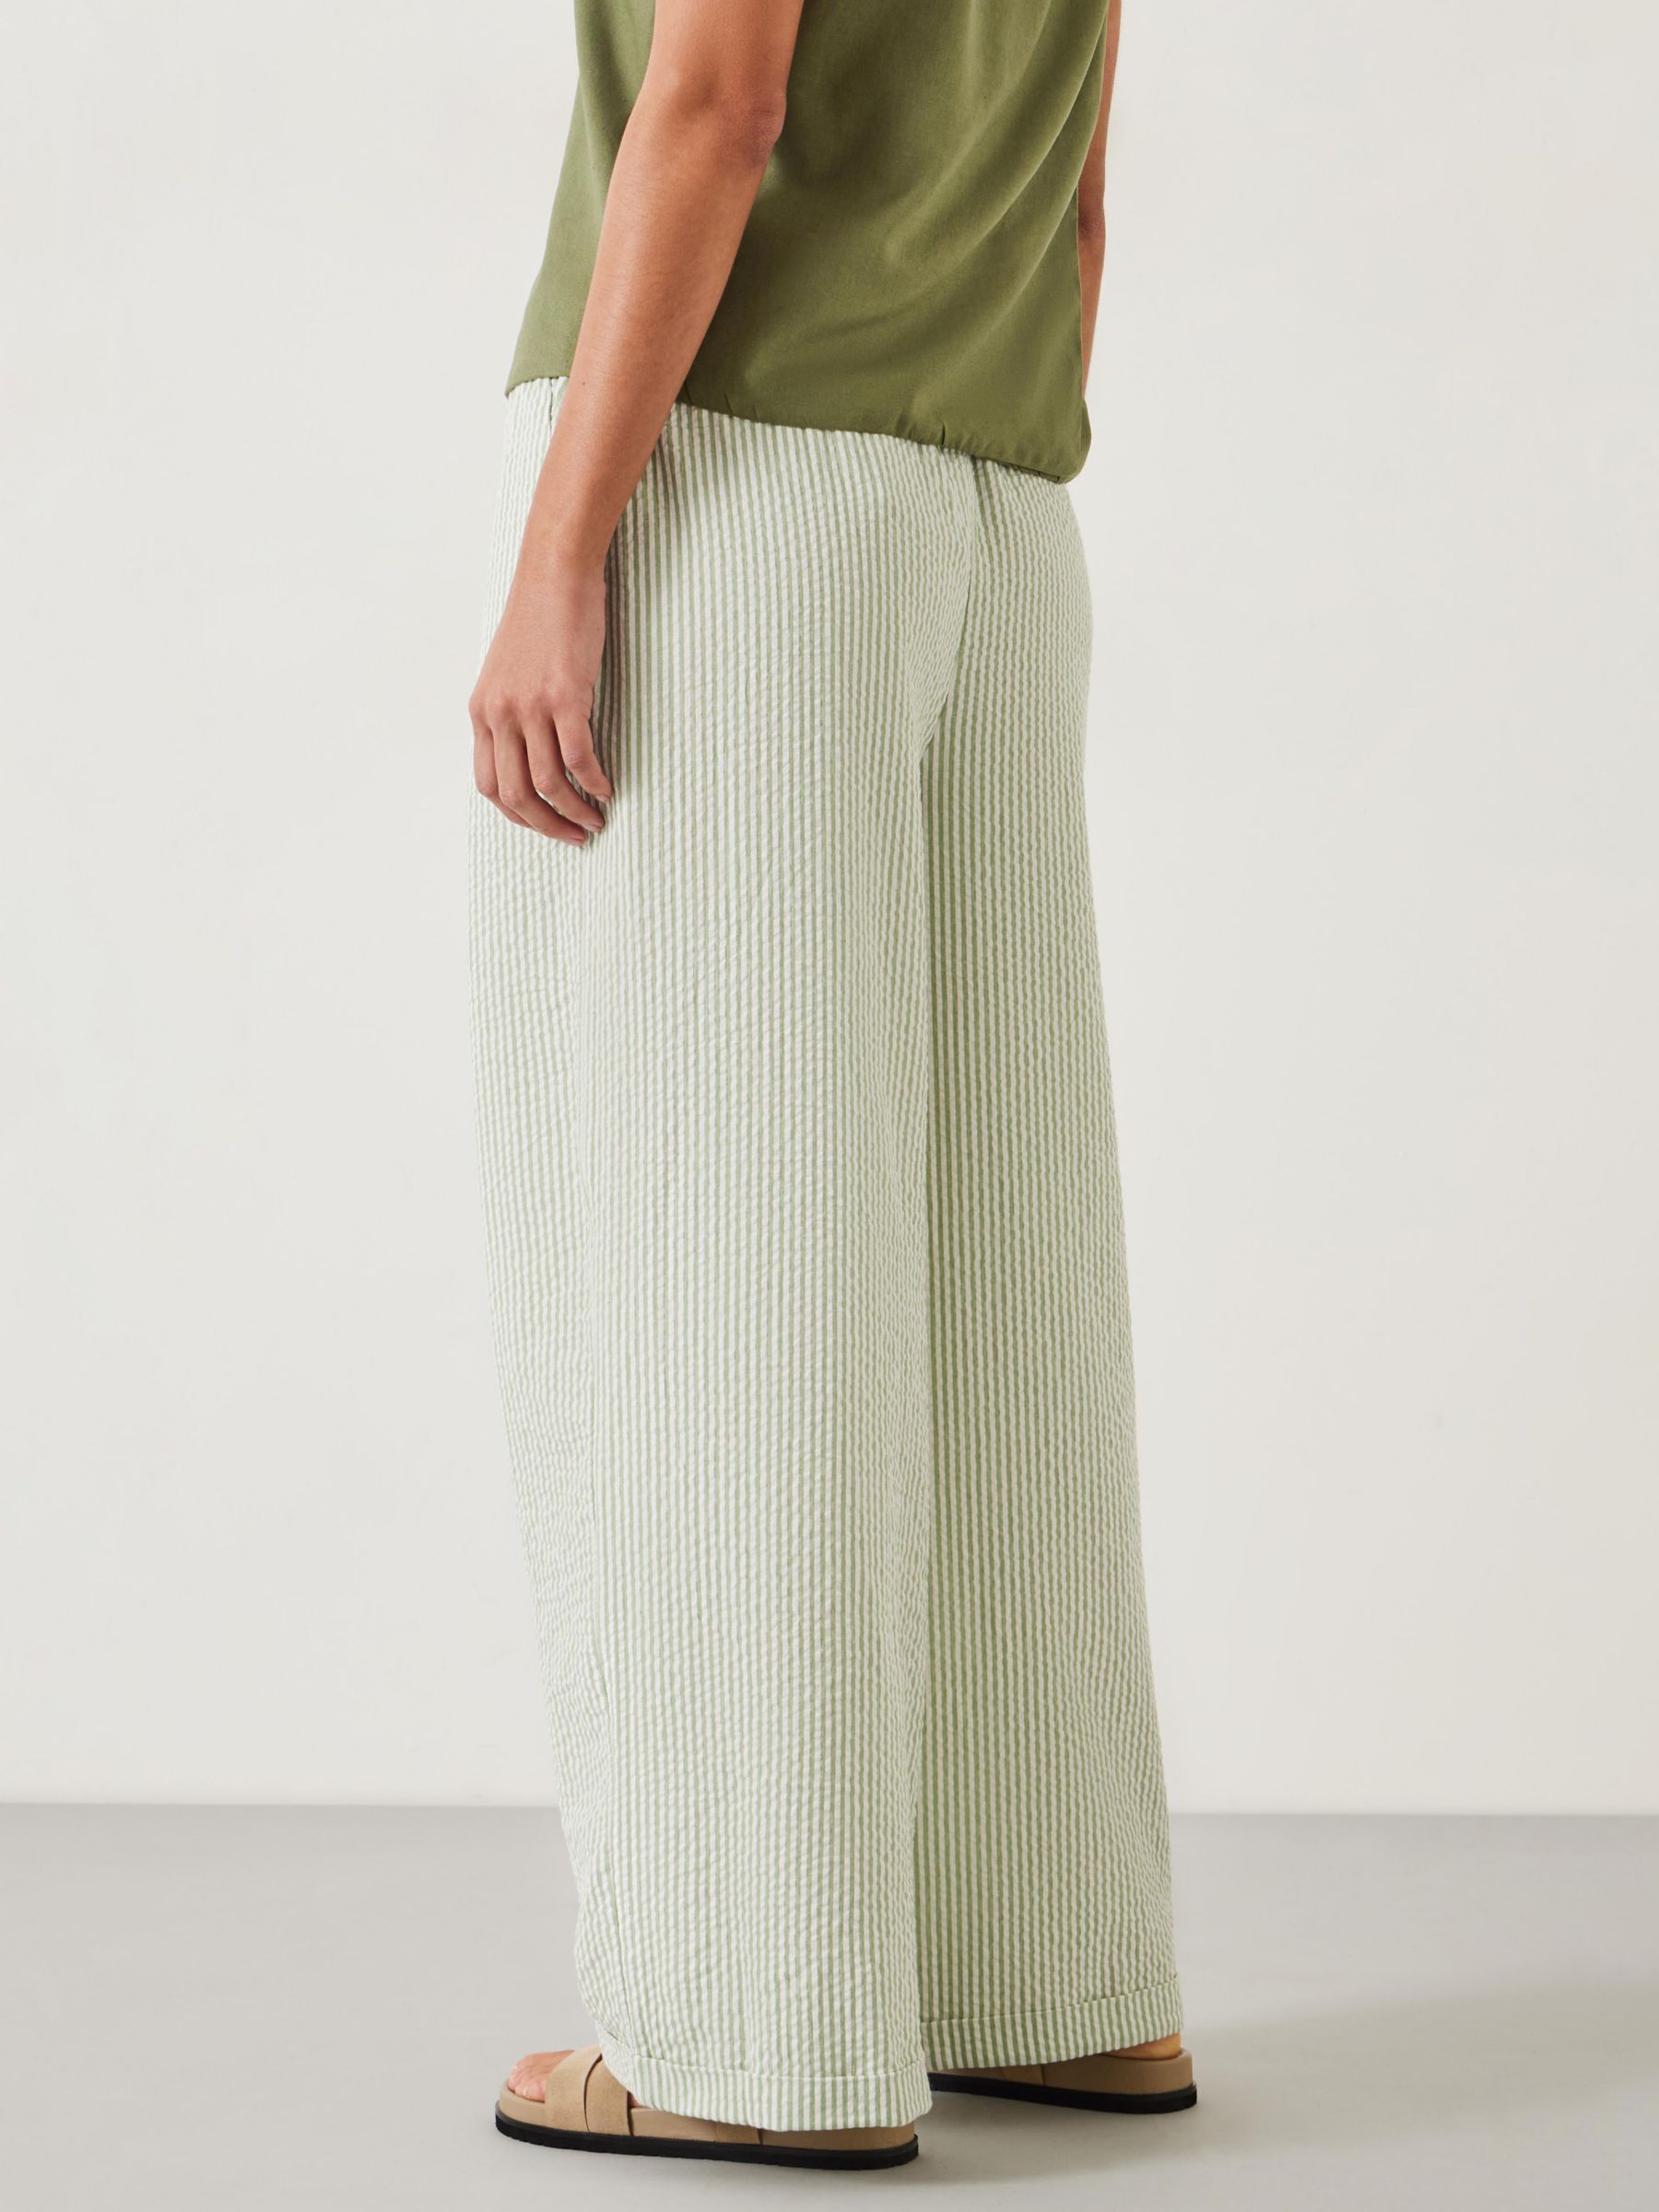 HUSH Sabrina Stripe Beach Trousers, Green/White Stripe, L